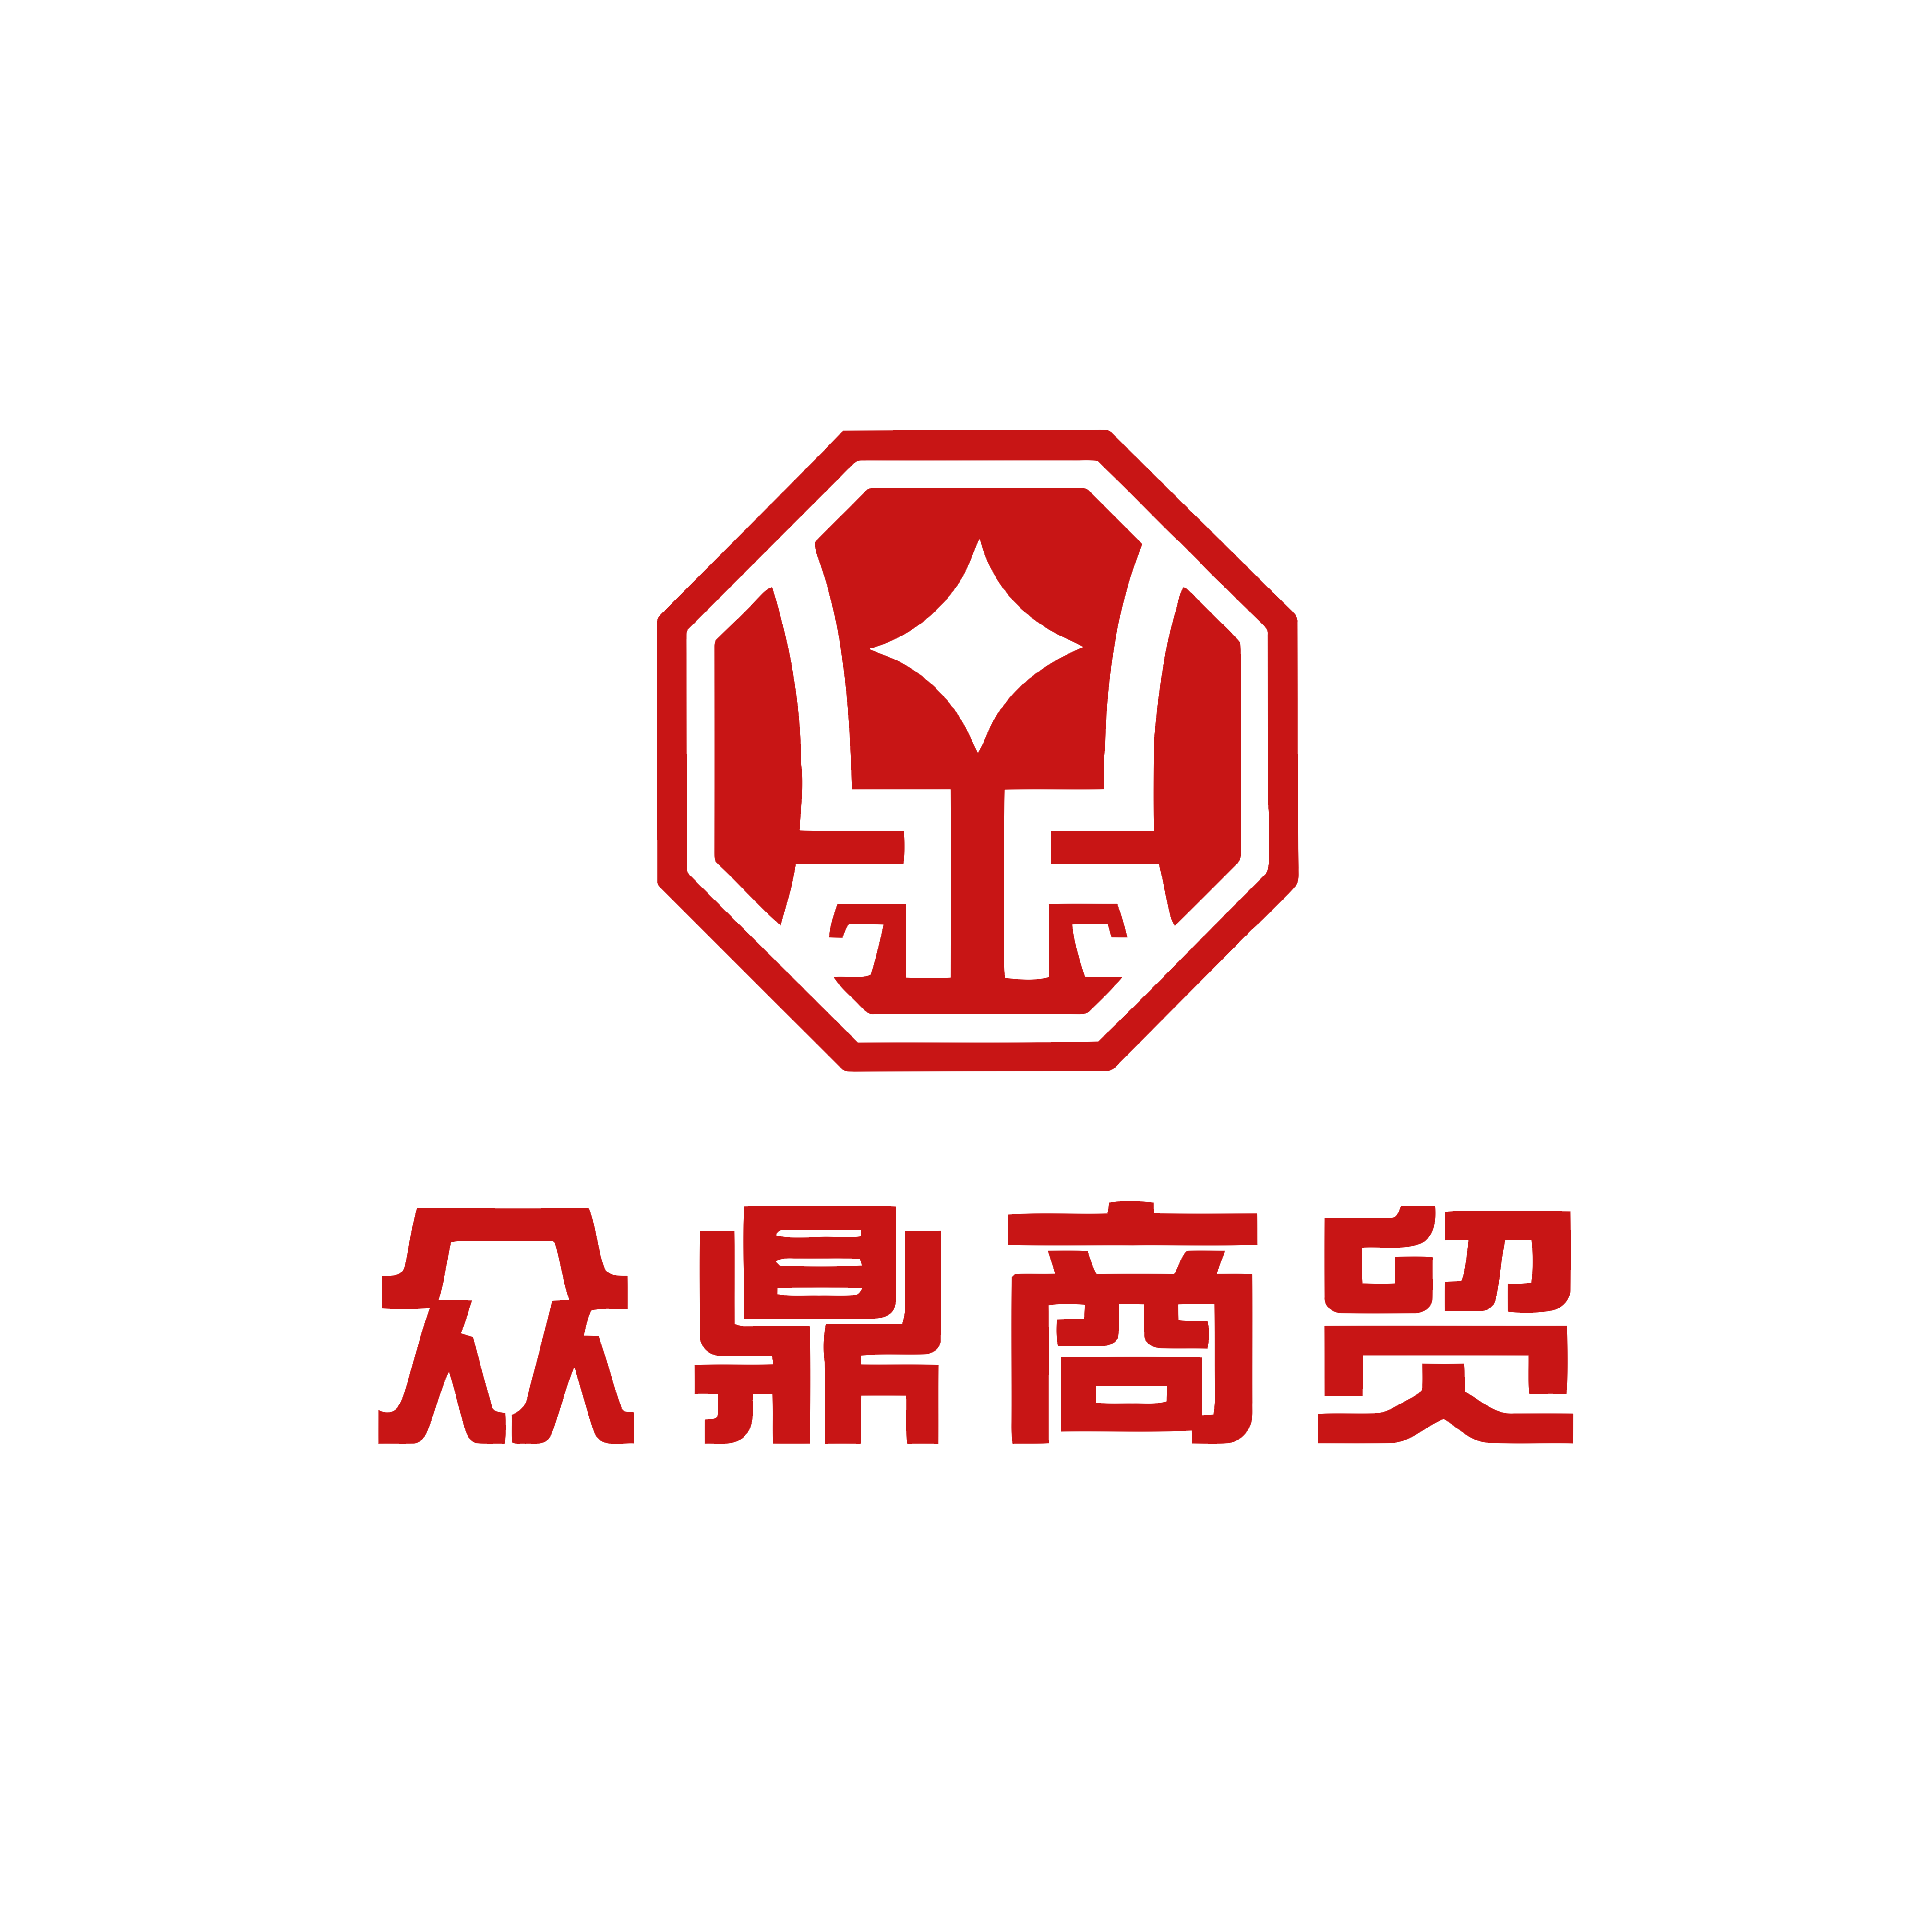 众鼎商贸logo.png